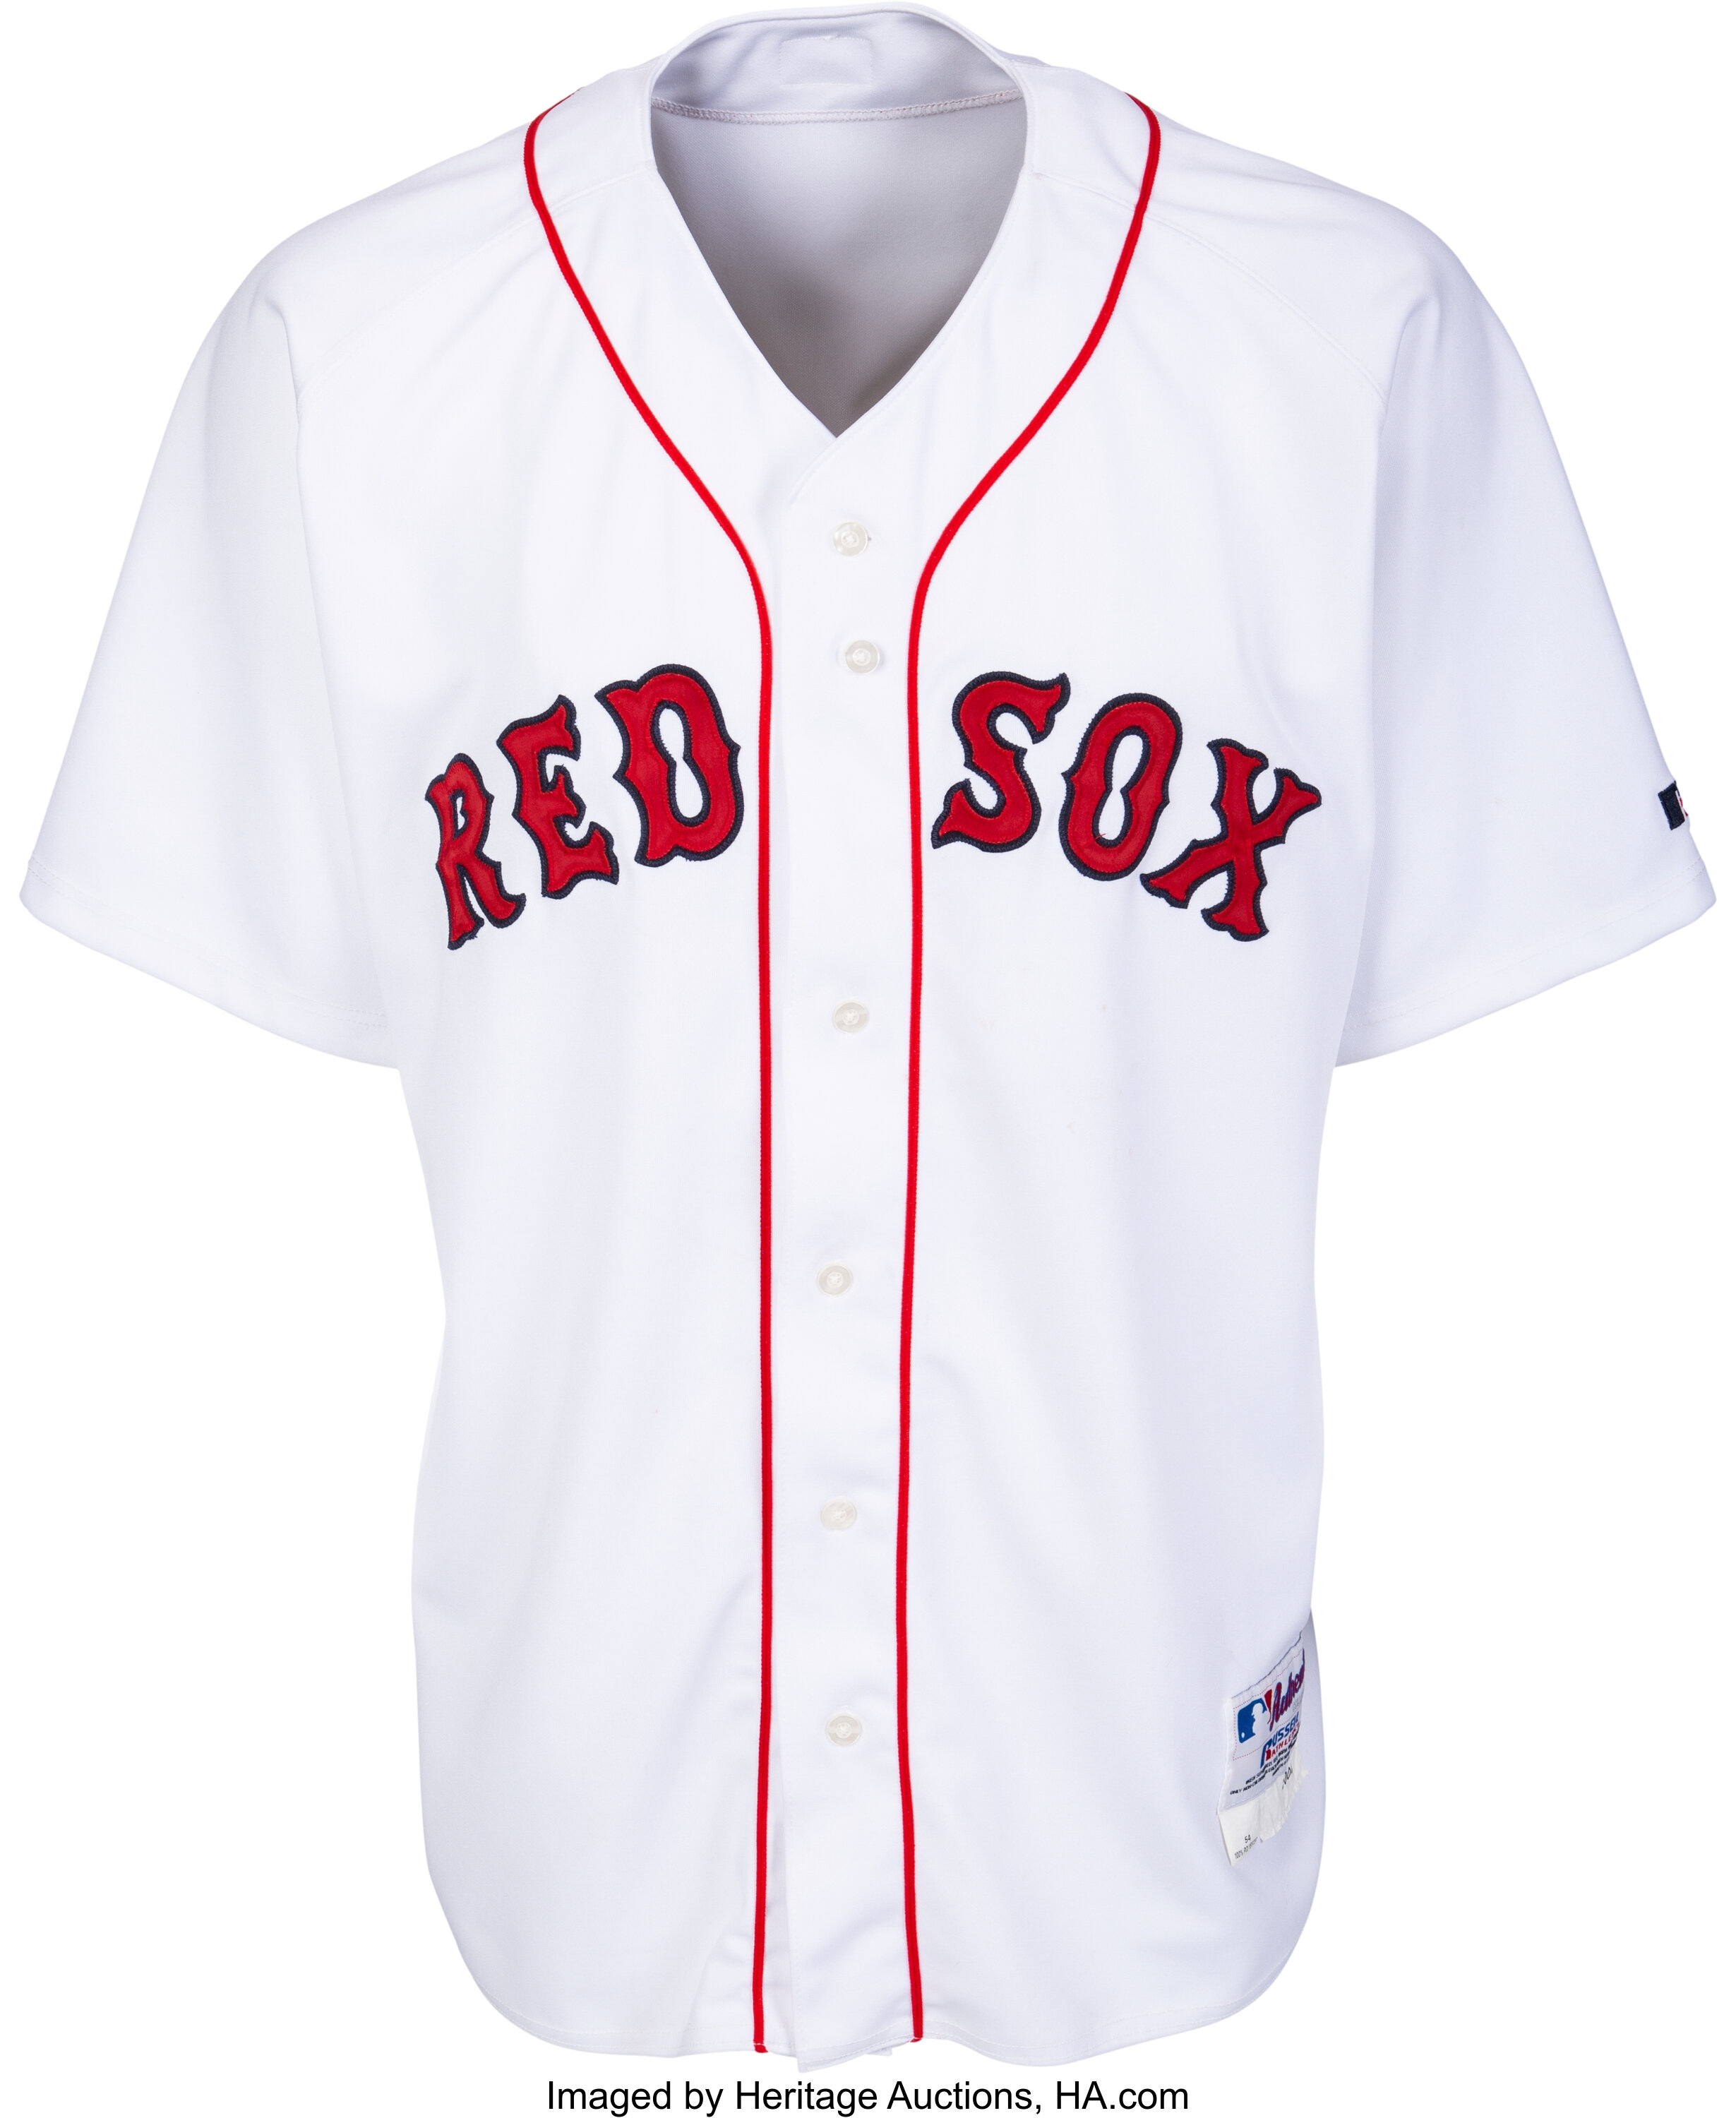 Manny Ramirez player worn jersey patch baseball card (Boston Red